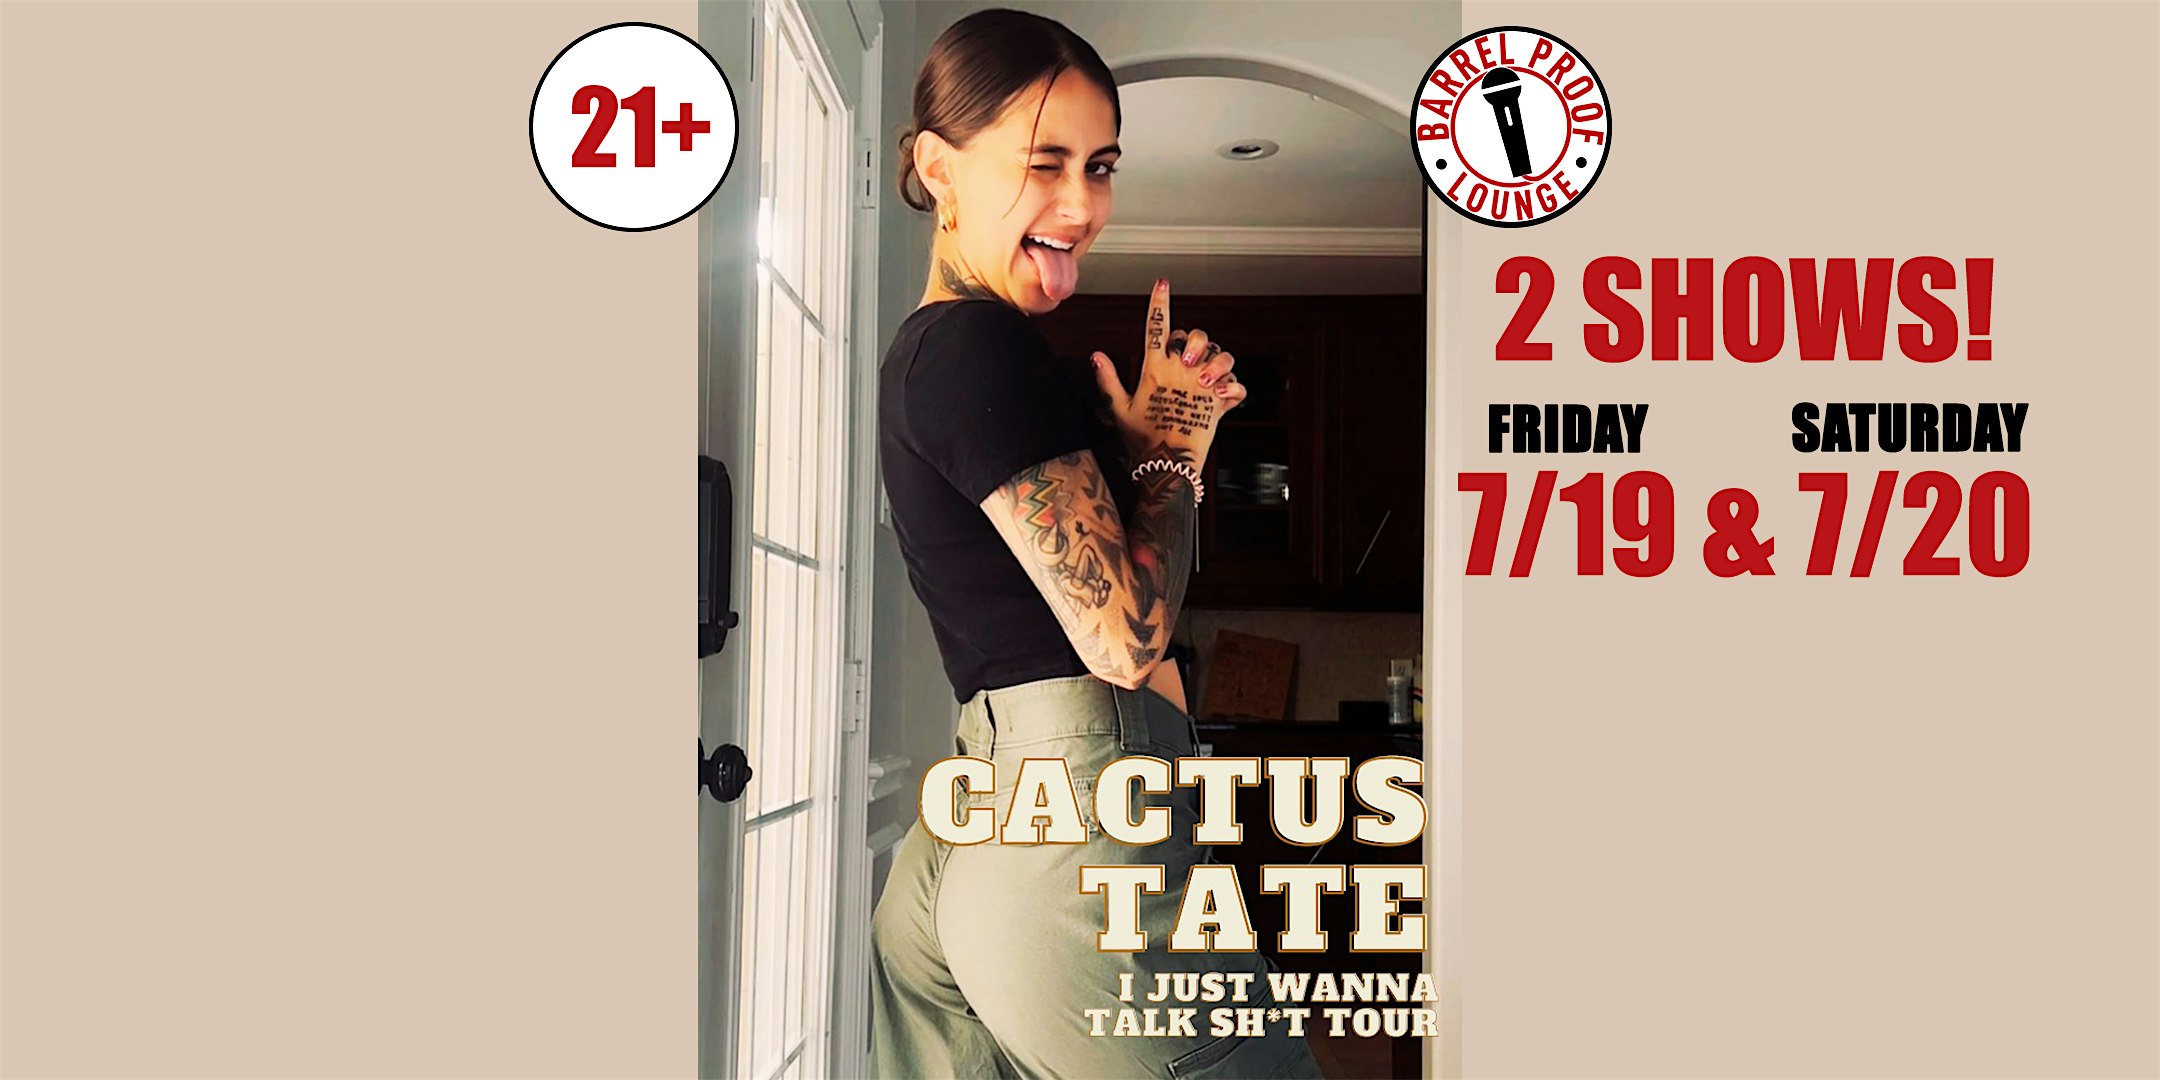 Friday Standup Comedy - Cactus Tate - I Just Wanna Talk Sh!t Tour!